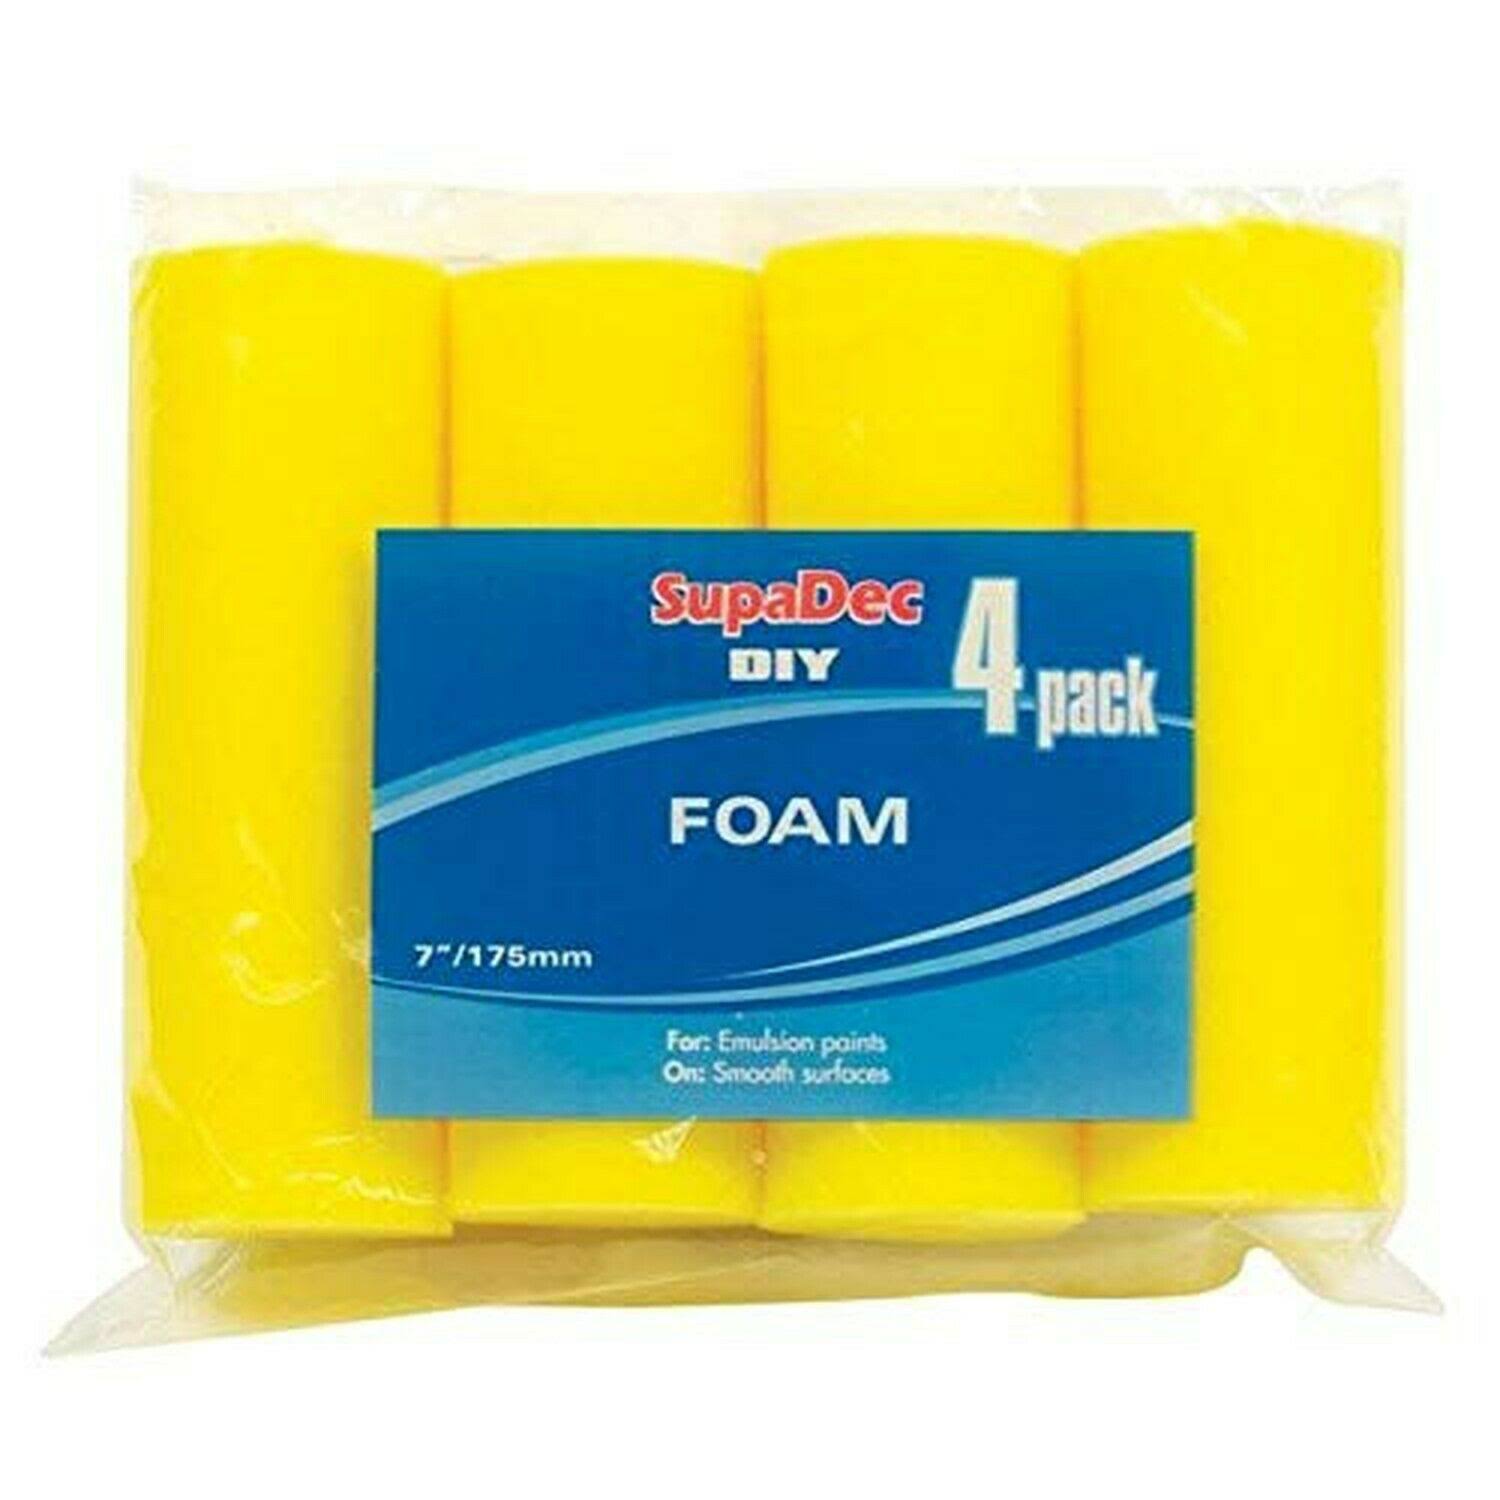 Supadec Foam Roller Refills 7"/175mm, 4 Pack